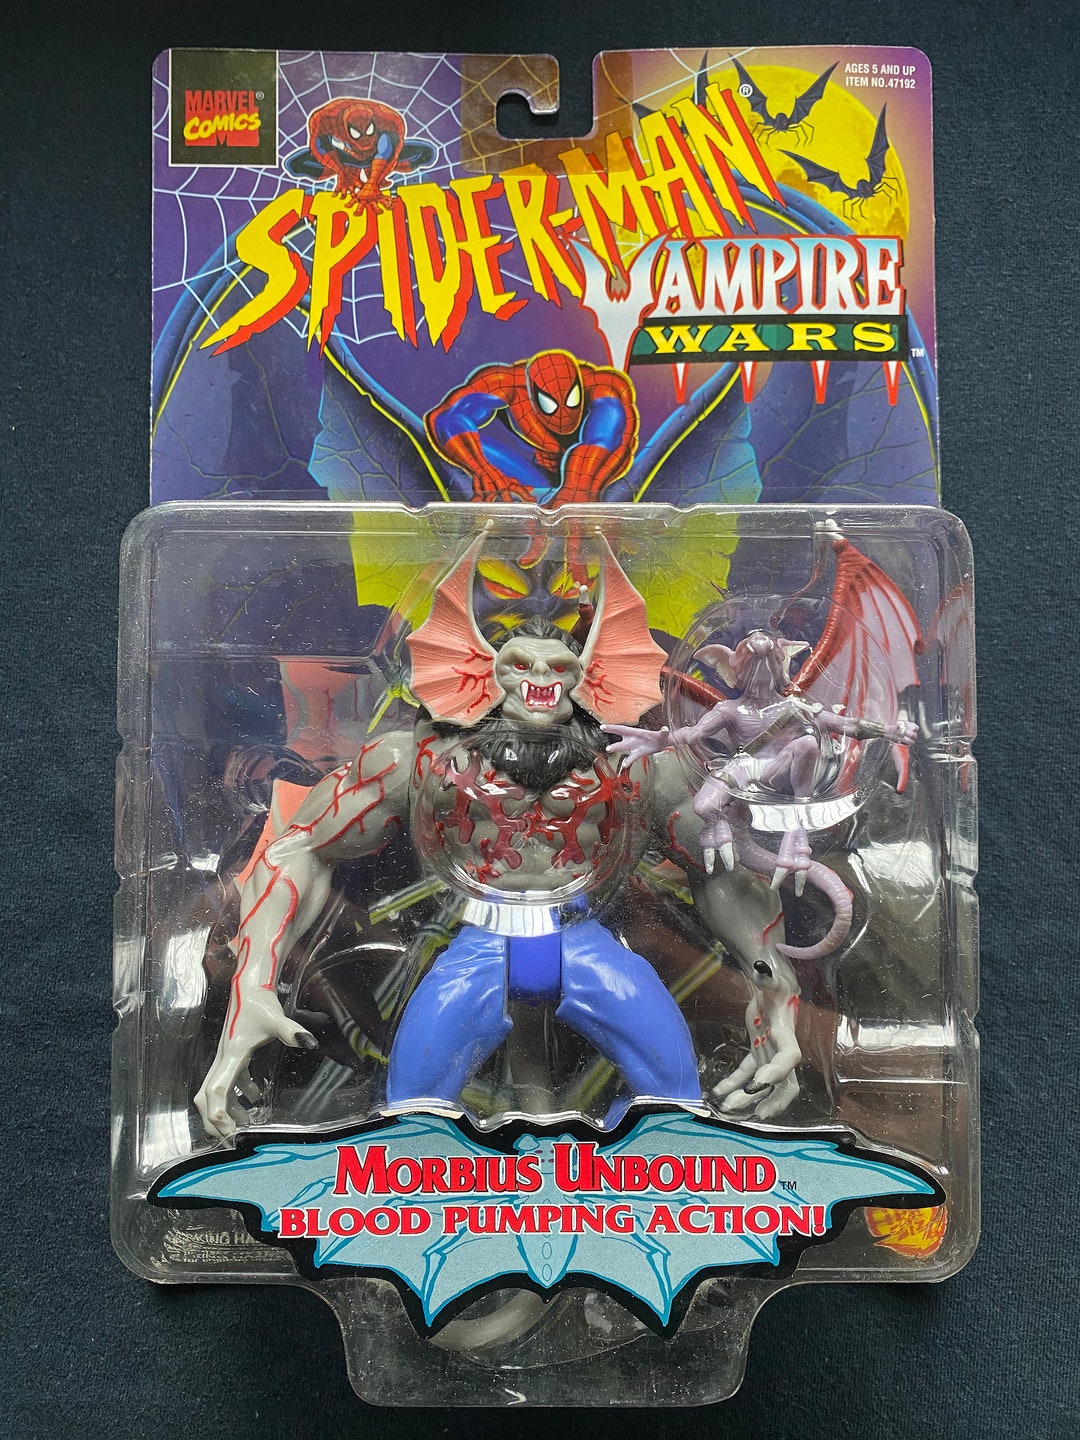 Marvel Legends Series Spider-Man vs Morbius Action Figures Kids Toy for  Boys & Girls, 2 Pack 